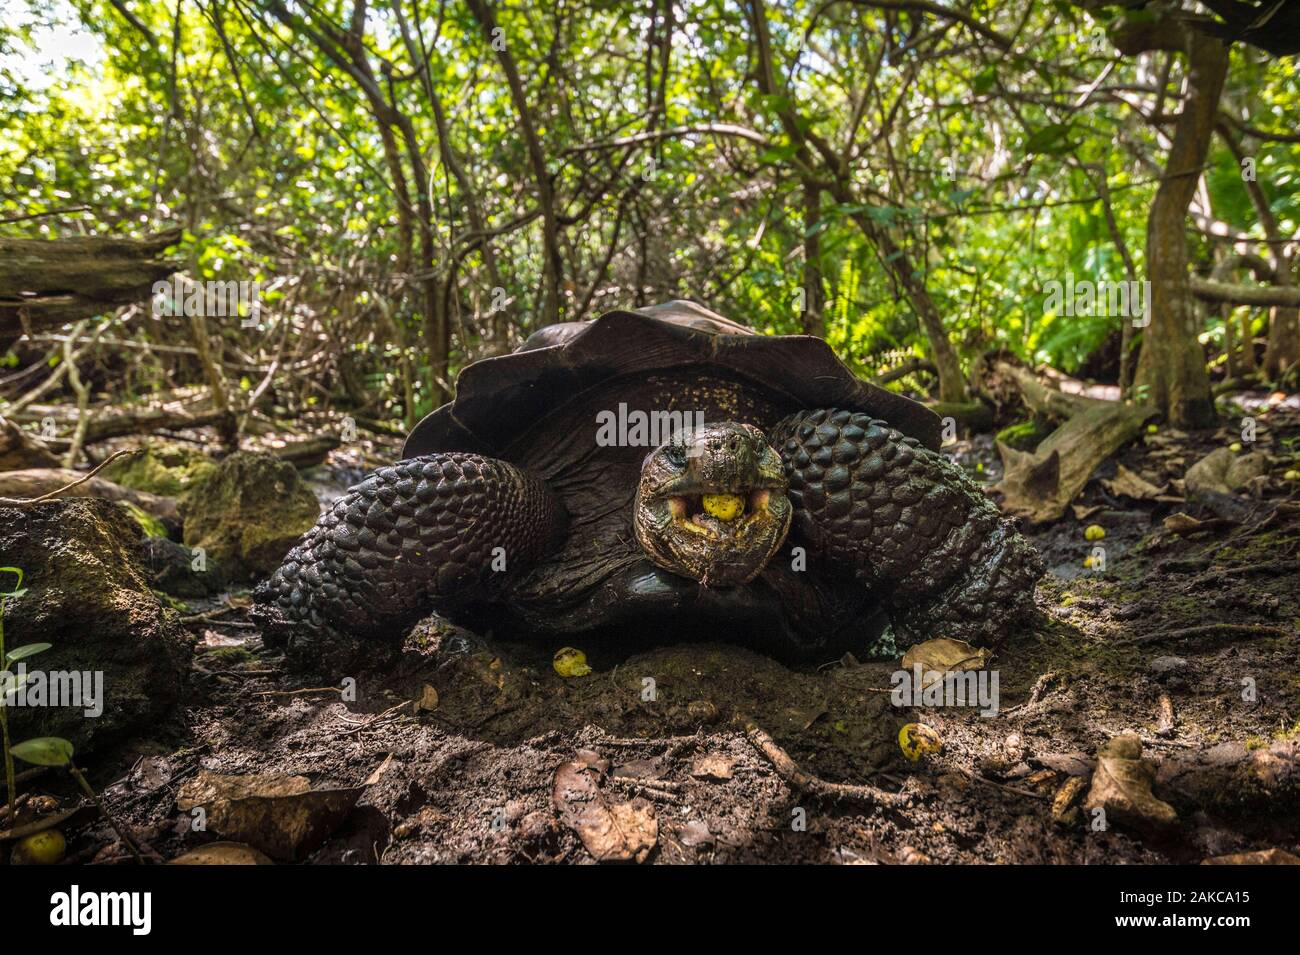 Ecuador, Galápagos Archipelago, listed as World Heritage by UNESCO, Isabela Island (Albemarie), Galápagos Giant Tortoise (Chelonoidis nigra) feeding on Mancenillier seeds (Hippomane mancinella) in the mangrove undergrowth Stock Photo